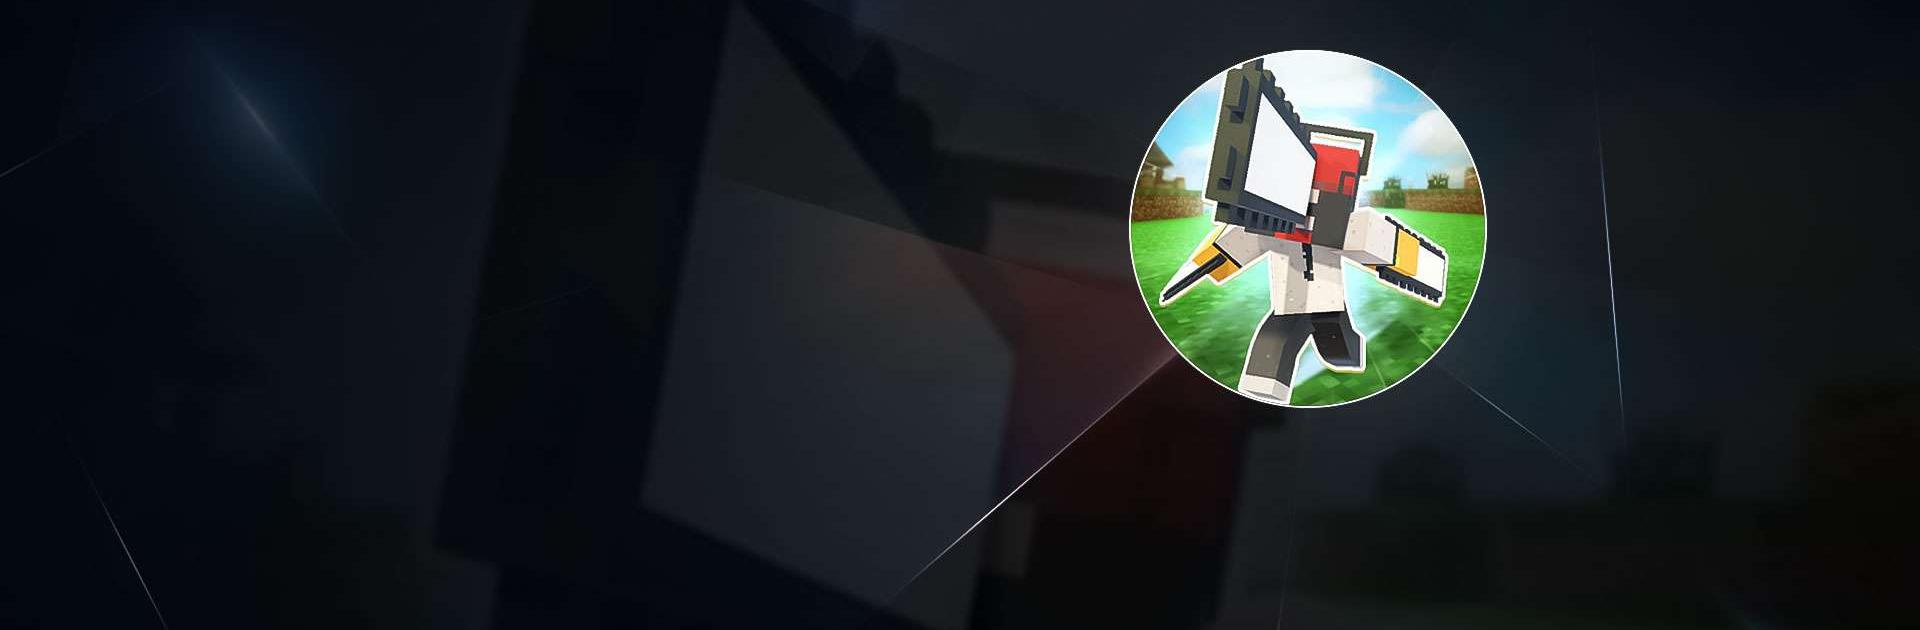 Download and Play Nextbots In Backrooms: Sandbox Game on PC & Mac (Emulator)